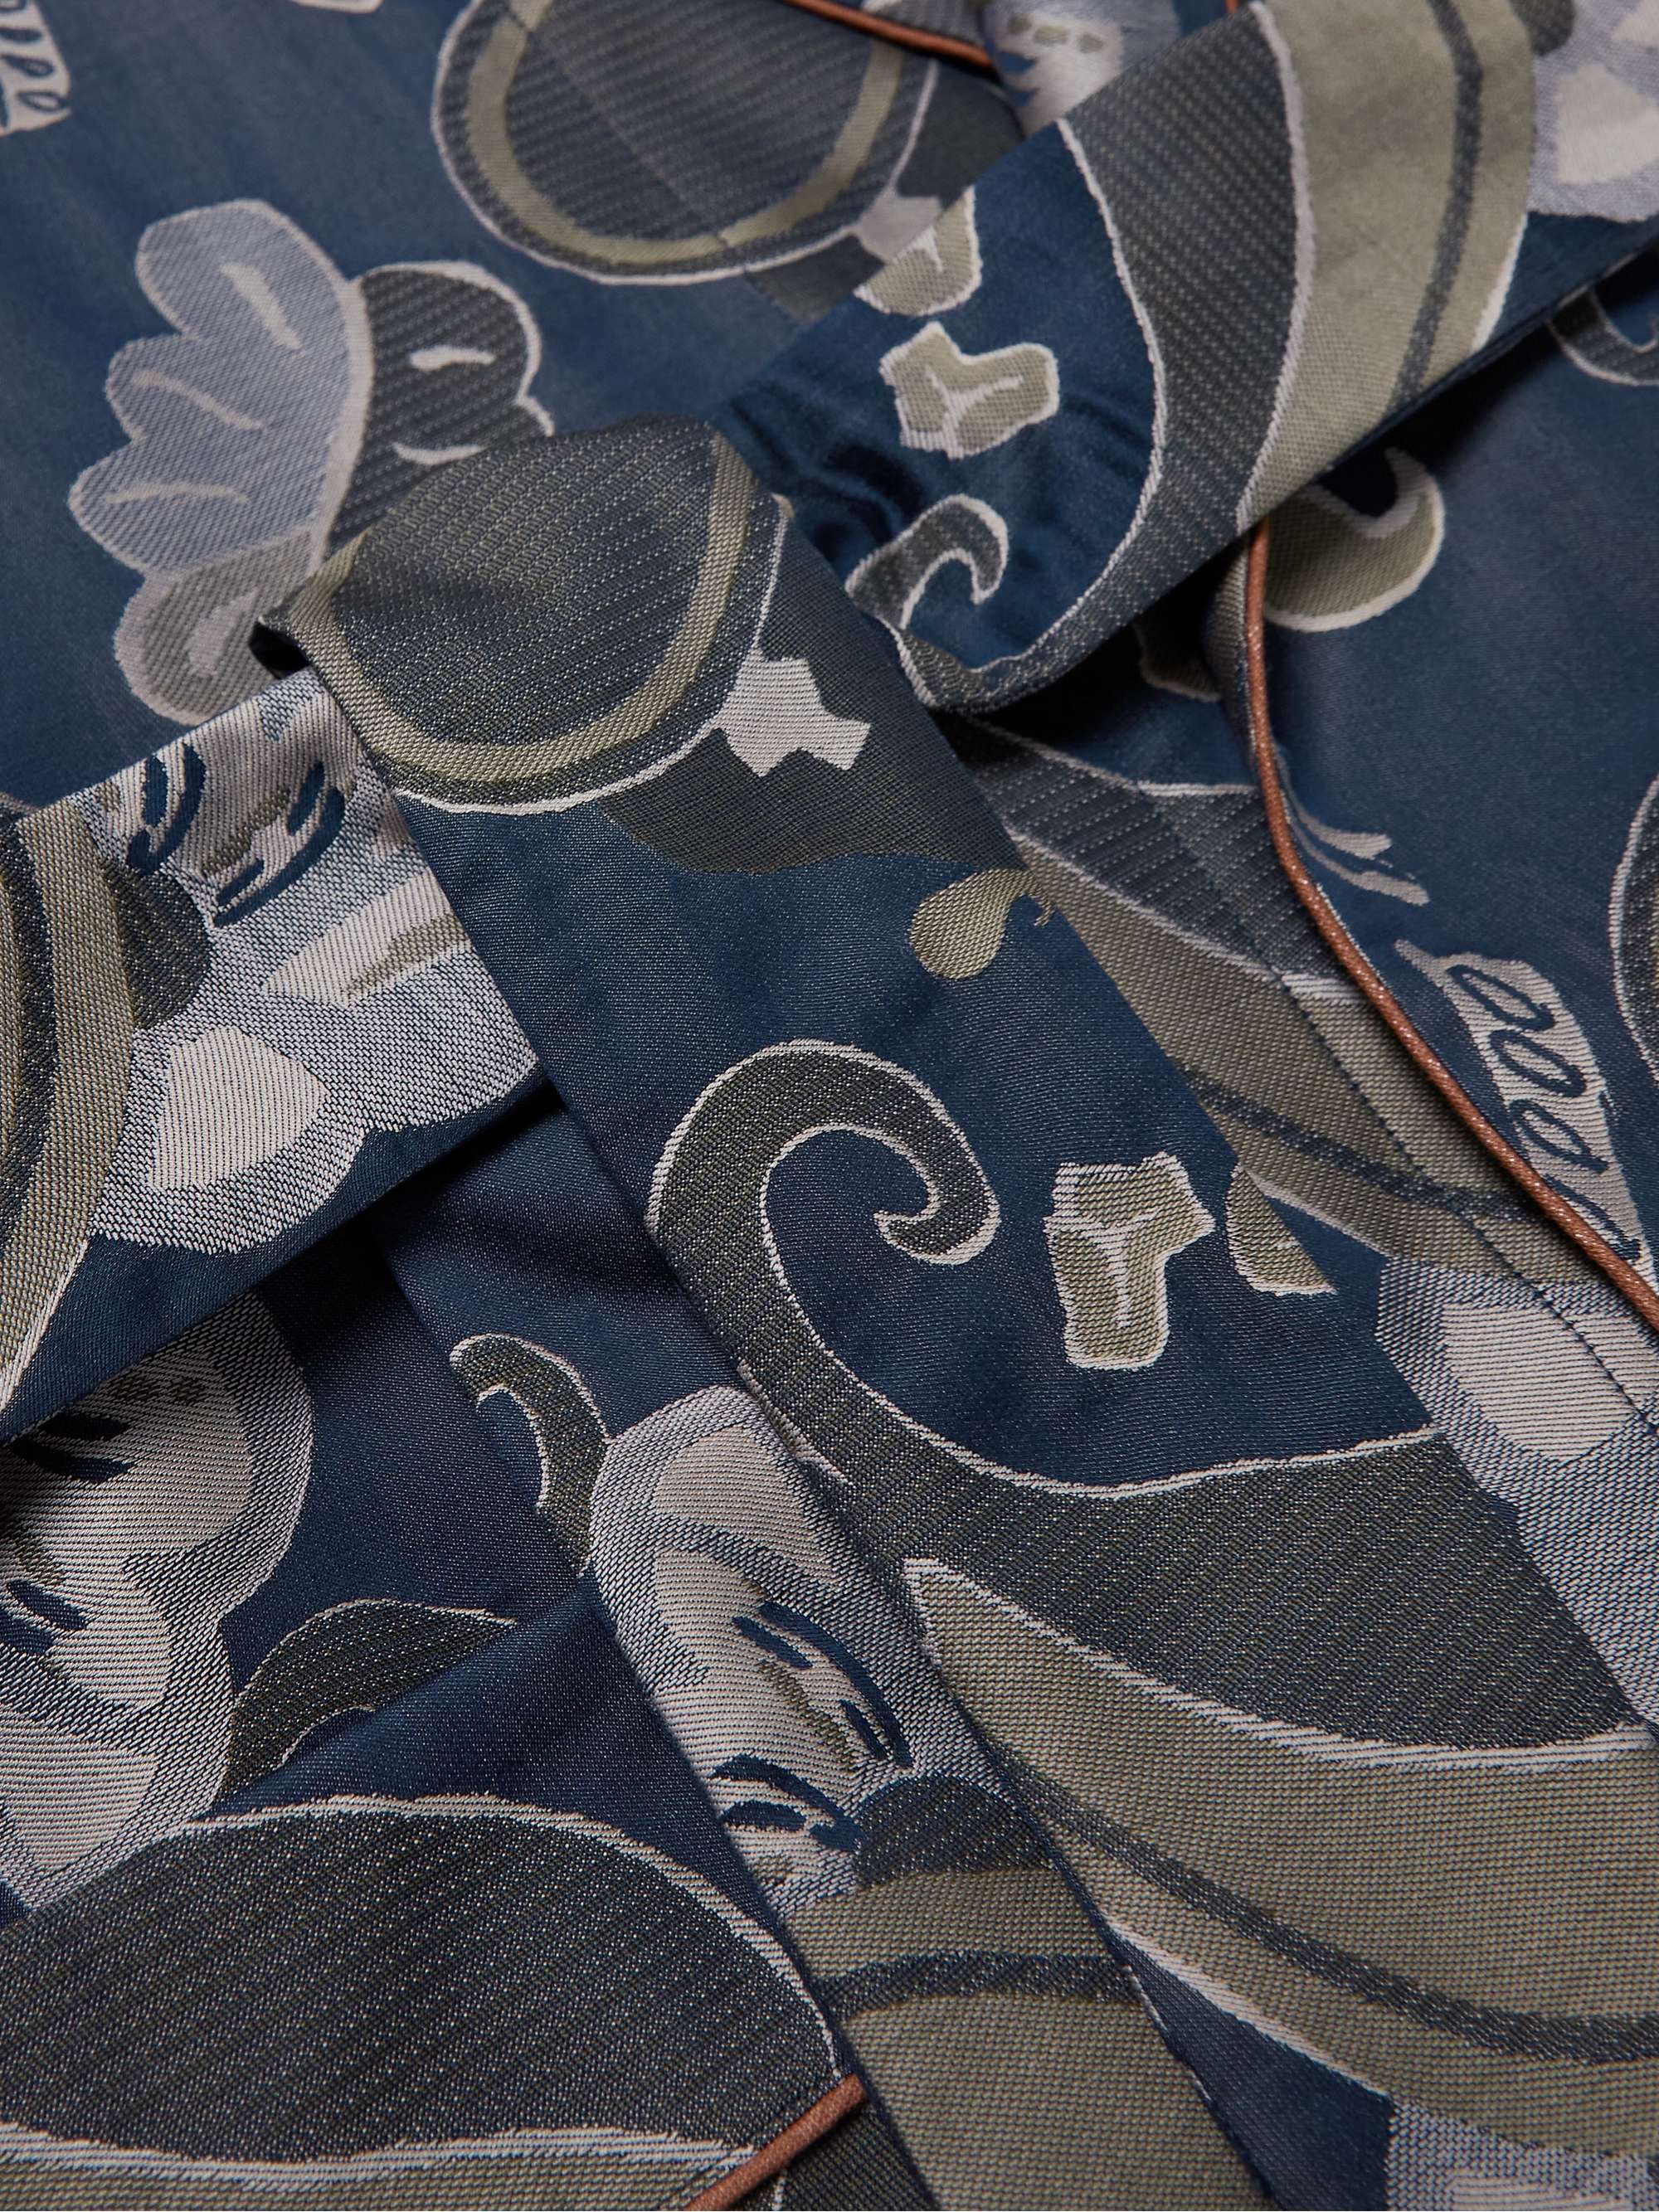 TURNBULL & ASSER Floral-Jacquard Cotton Robe